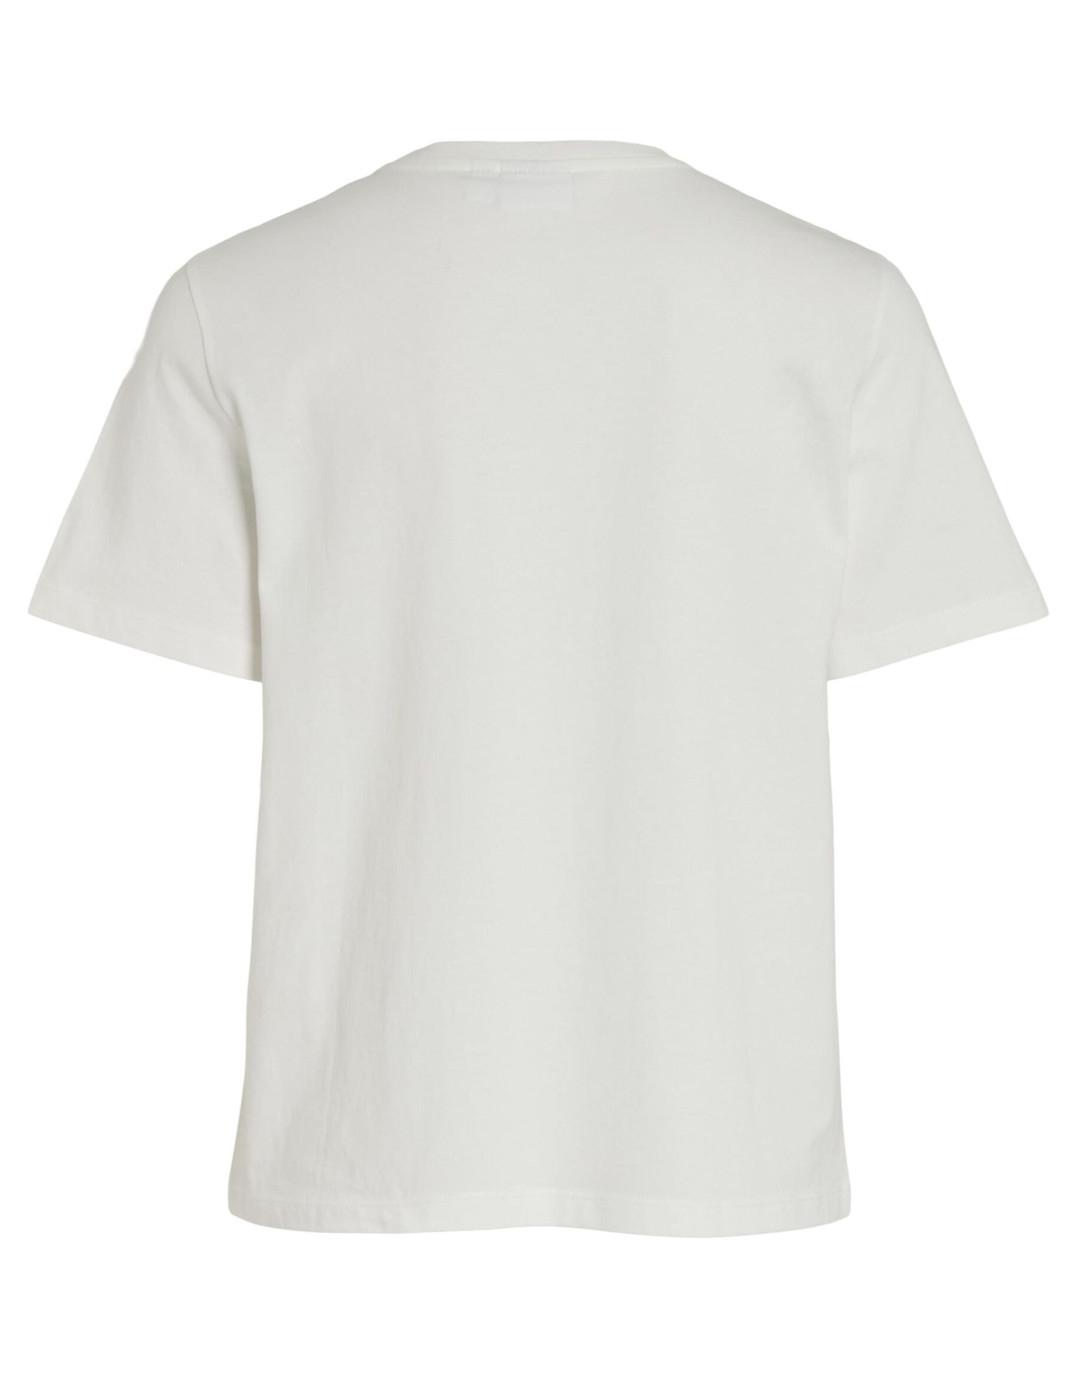 Camiseta Vila Sybil blanco true blue manga corta para mujer